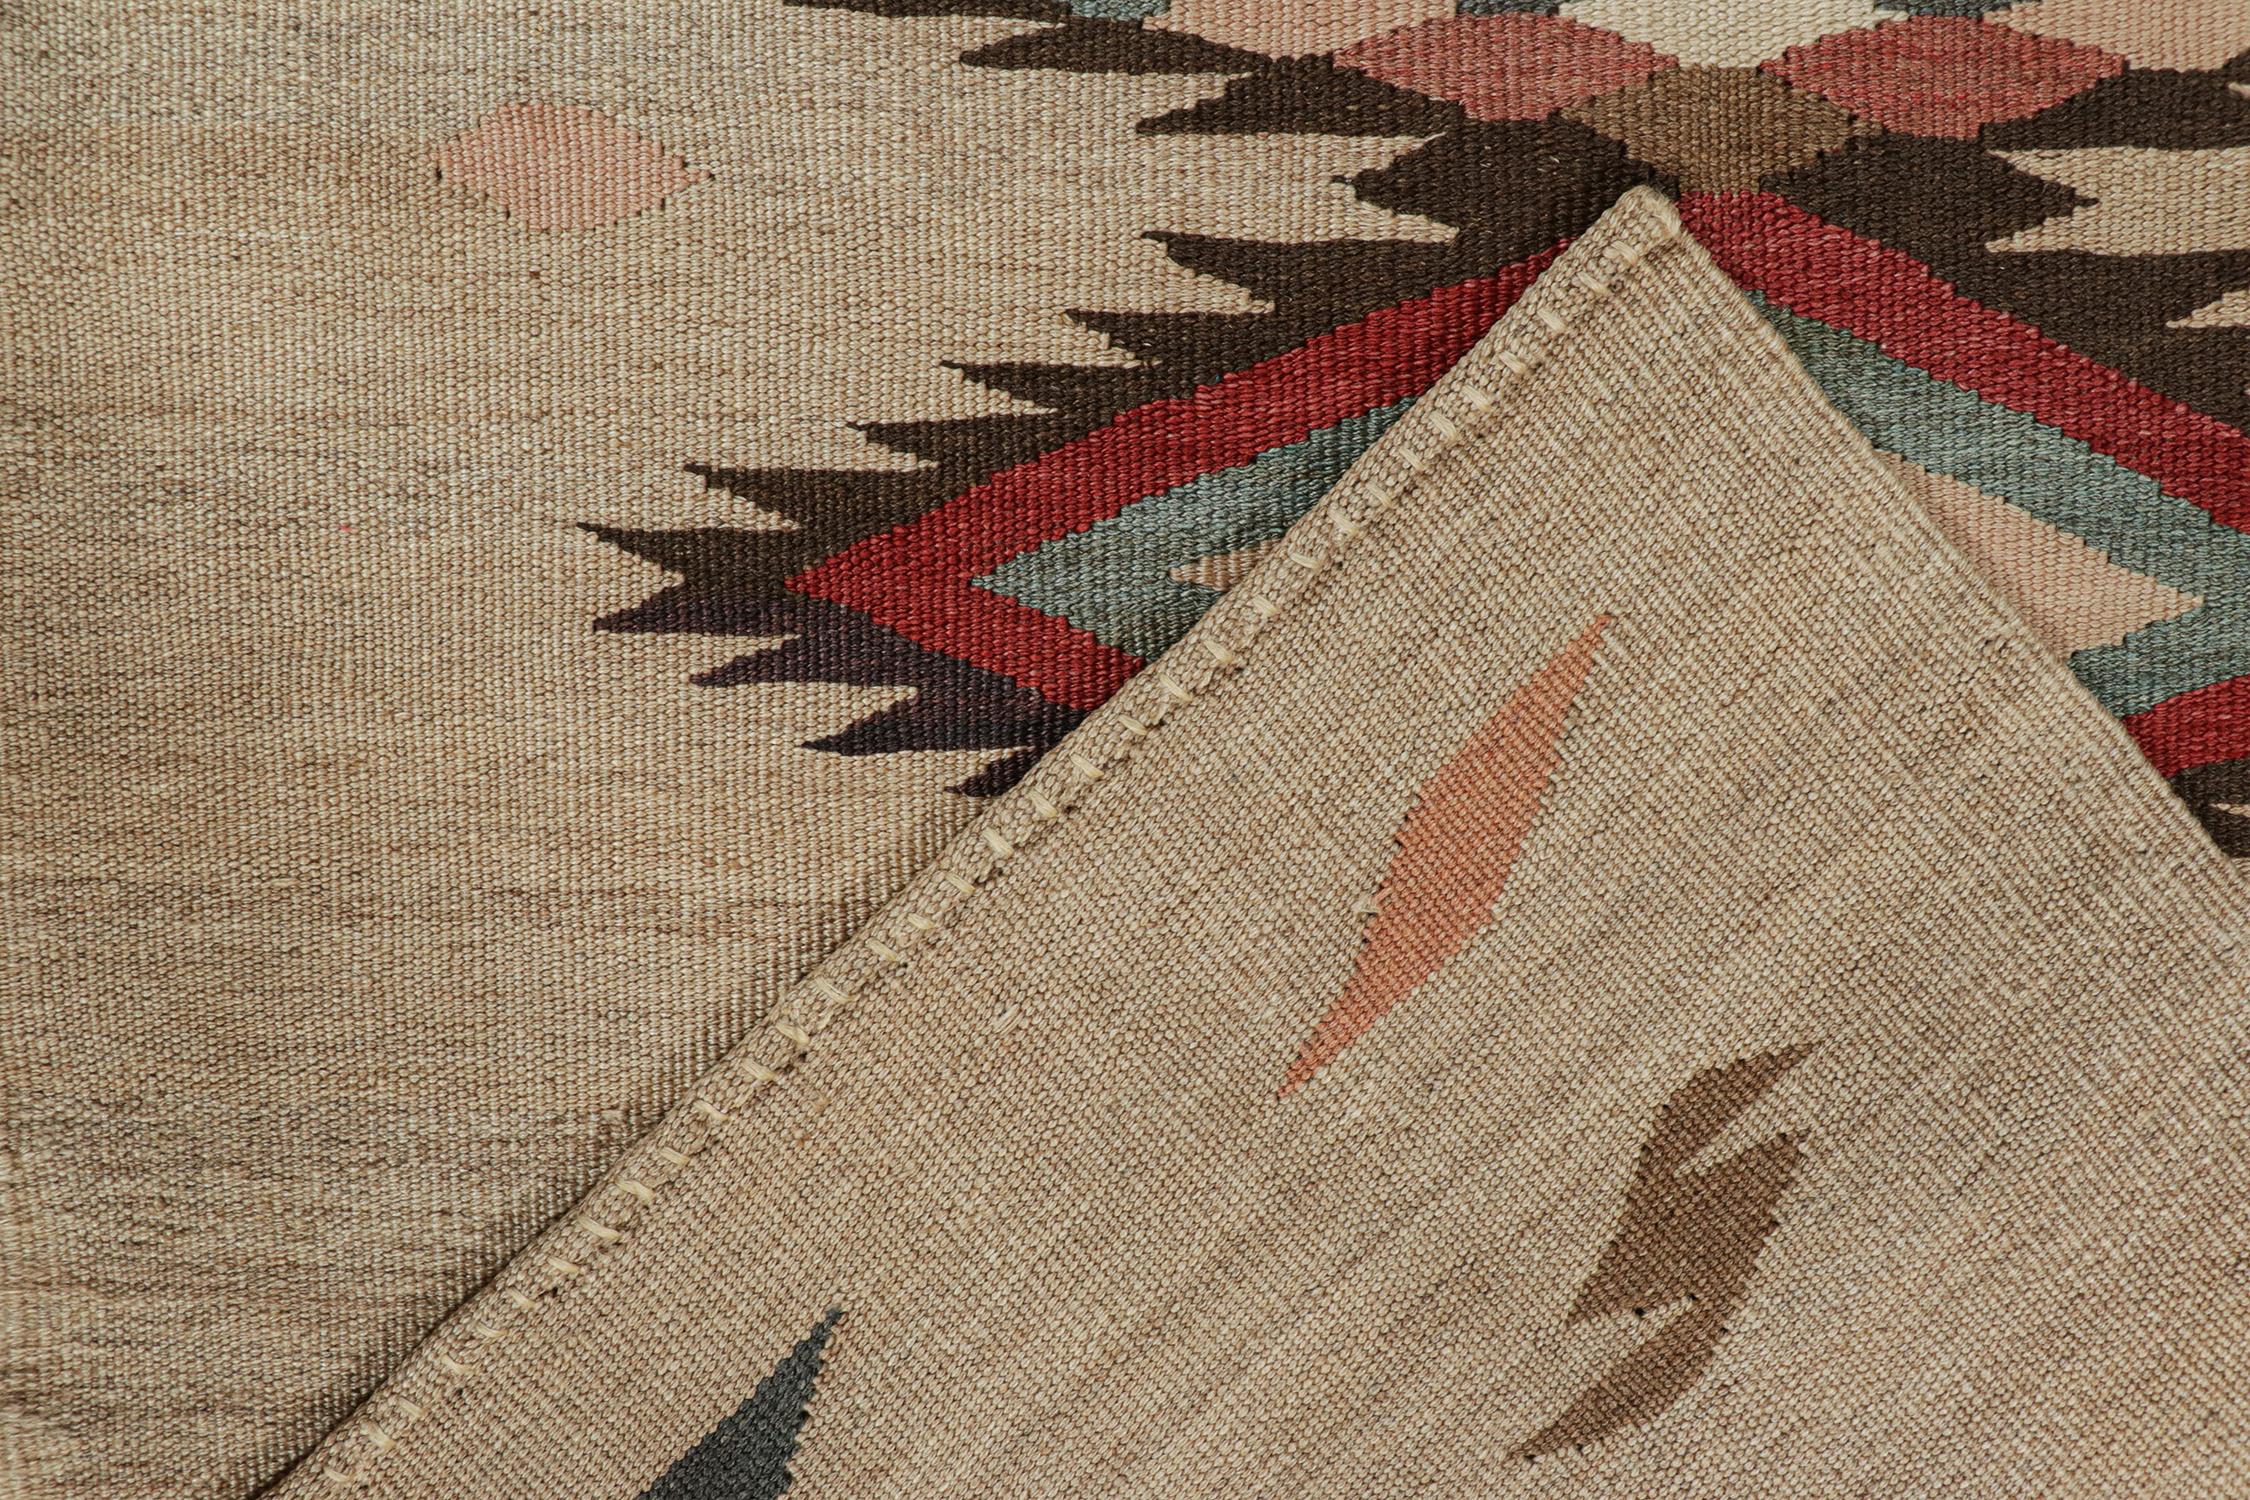 Wool Vintage Shahsavan Tribal Kilim Runner in Polychromatic Patterns by Rug & Kilim For Sale